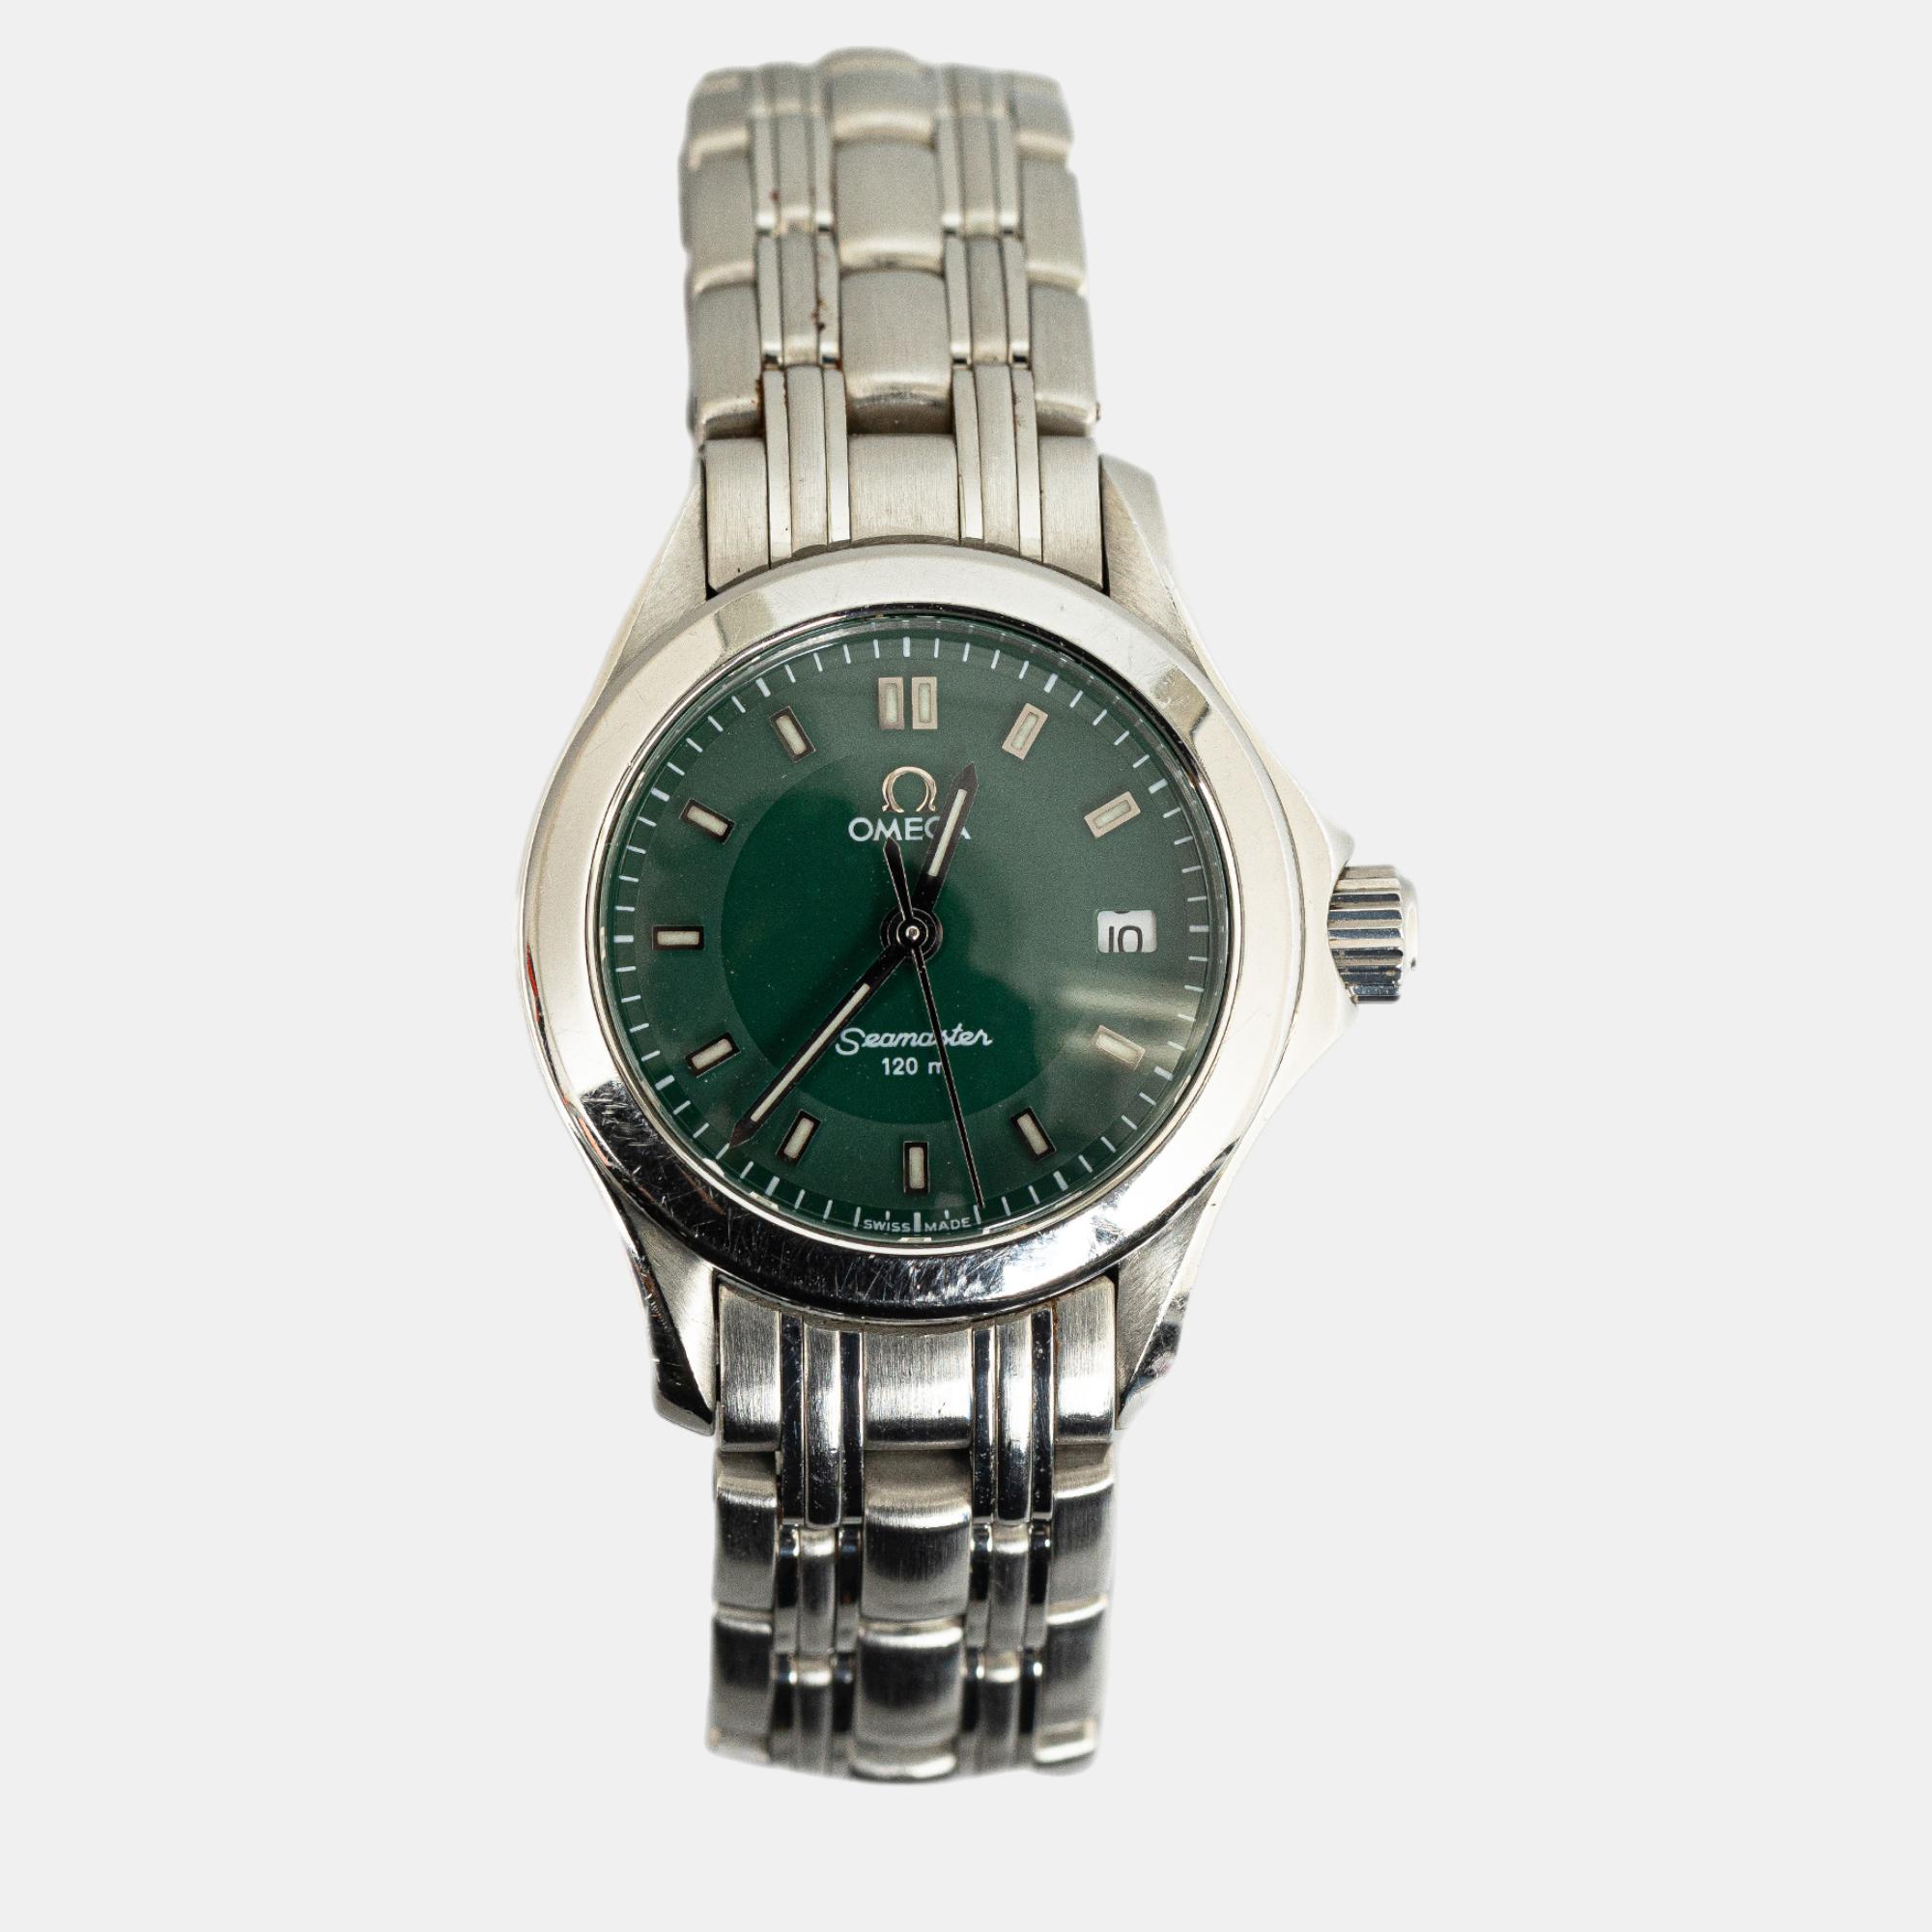 Omega green quartz stainless steel seamaster 120m watch